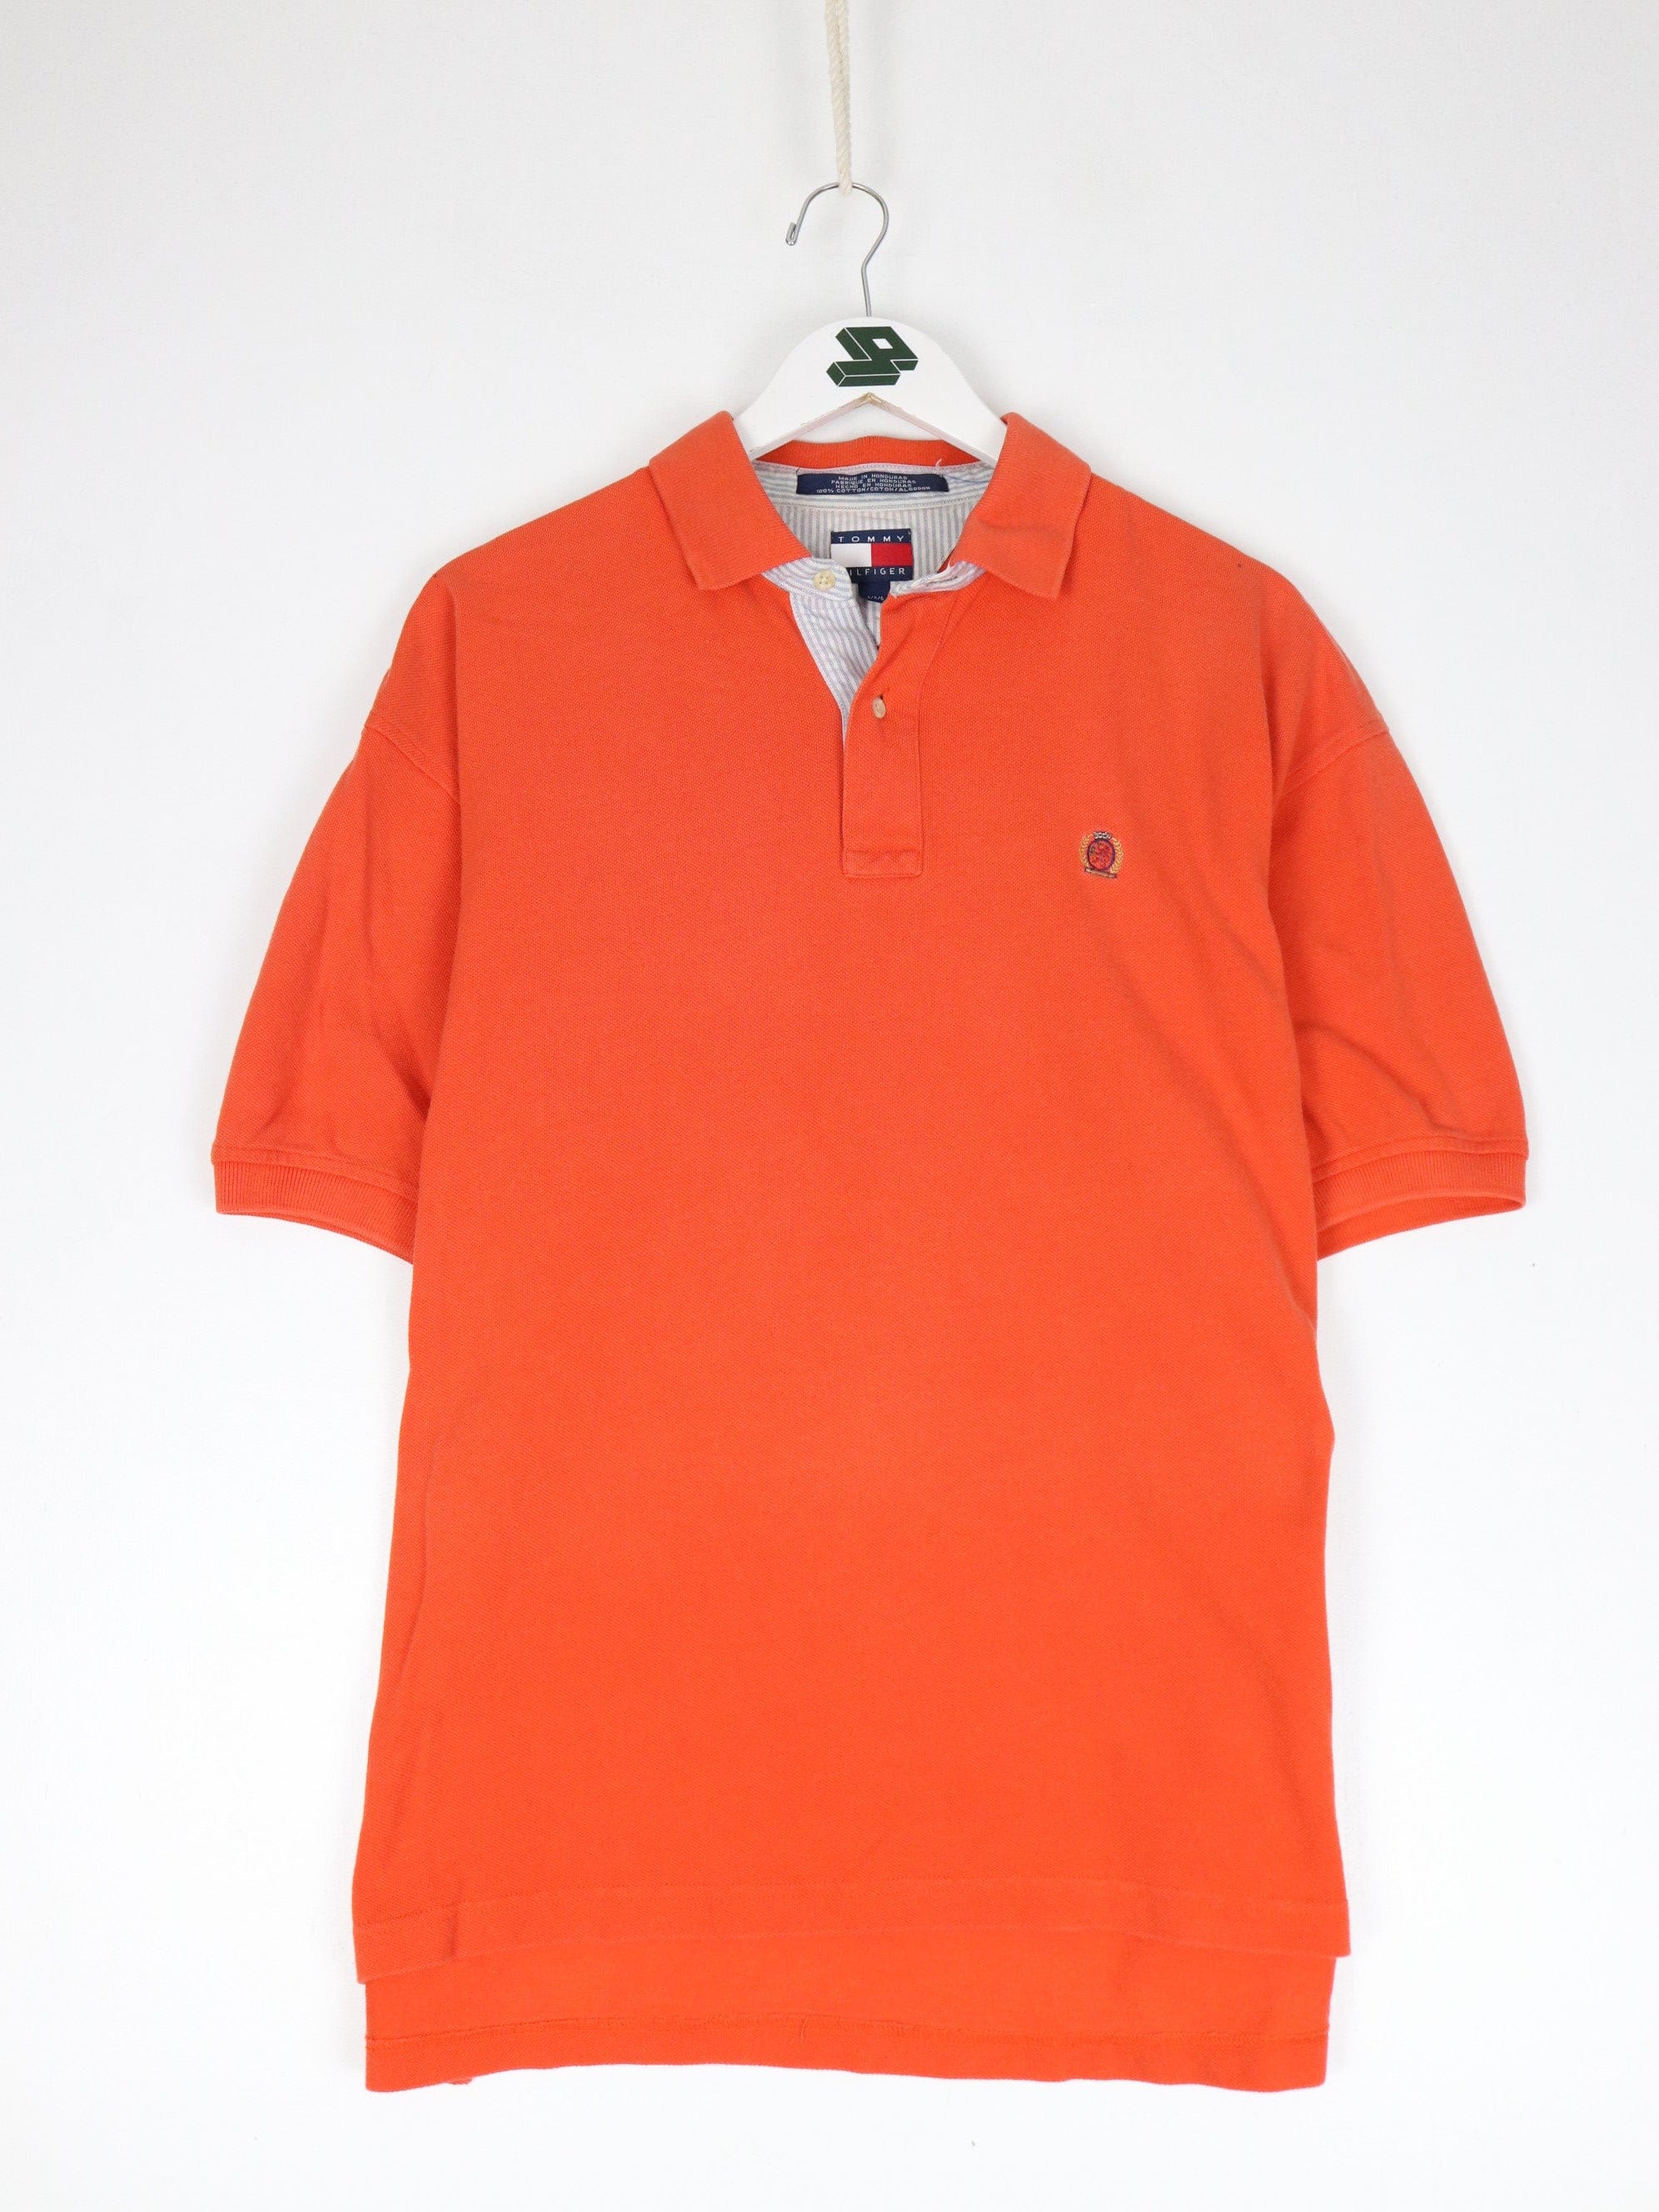 Vintage Tommy Hilfiger Polo Shirt Mens Large Orange Casual